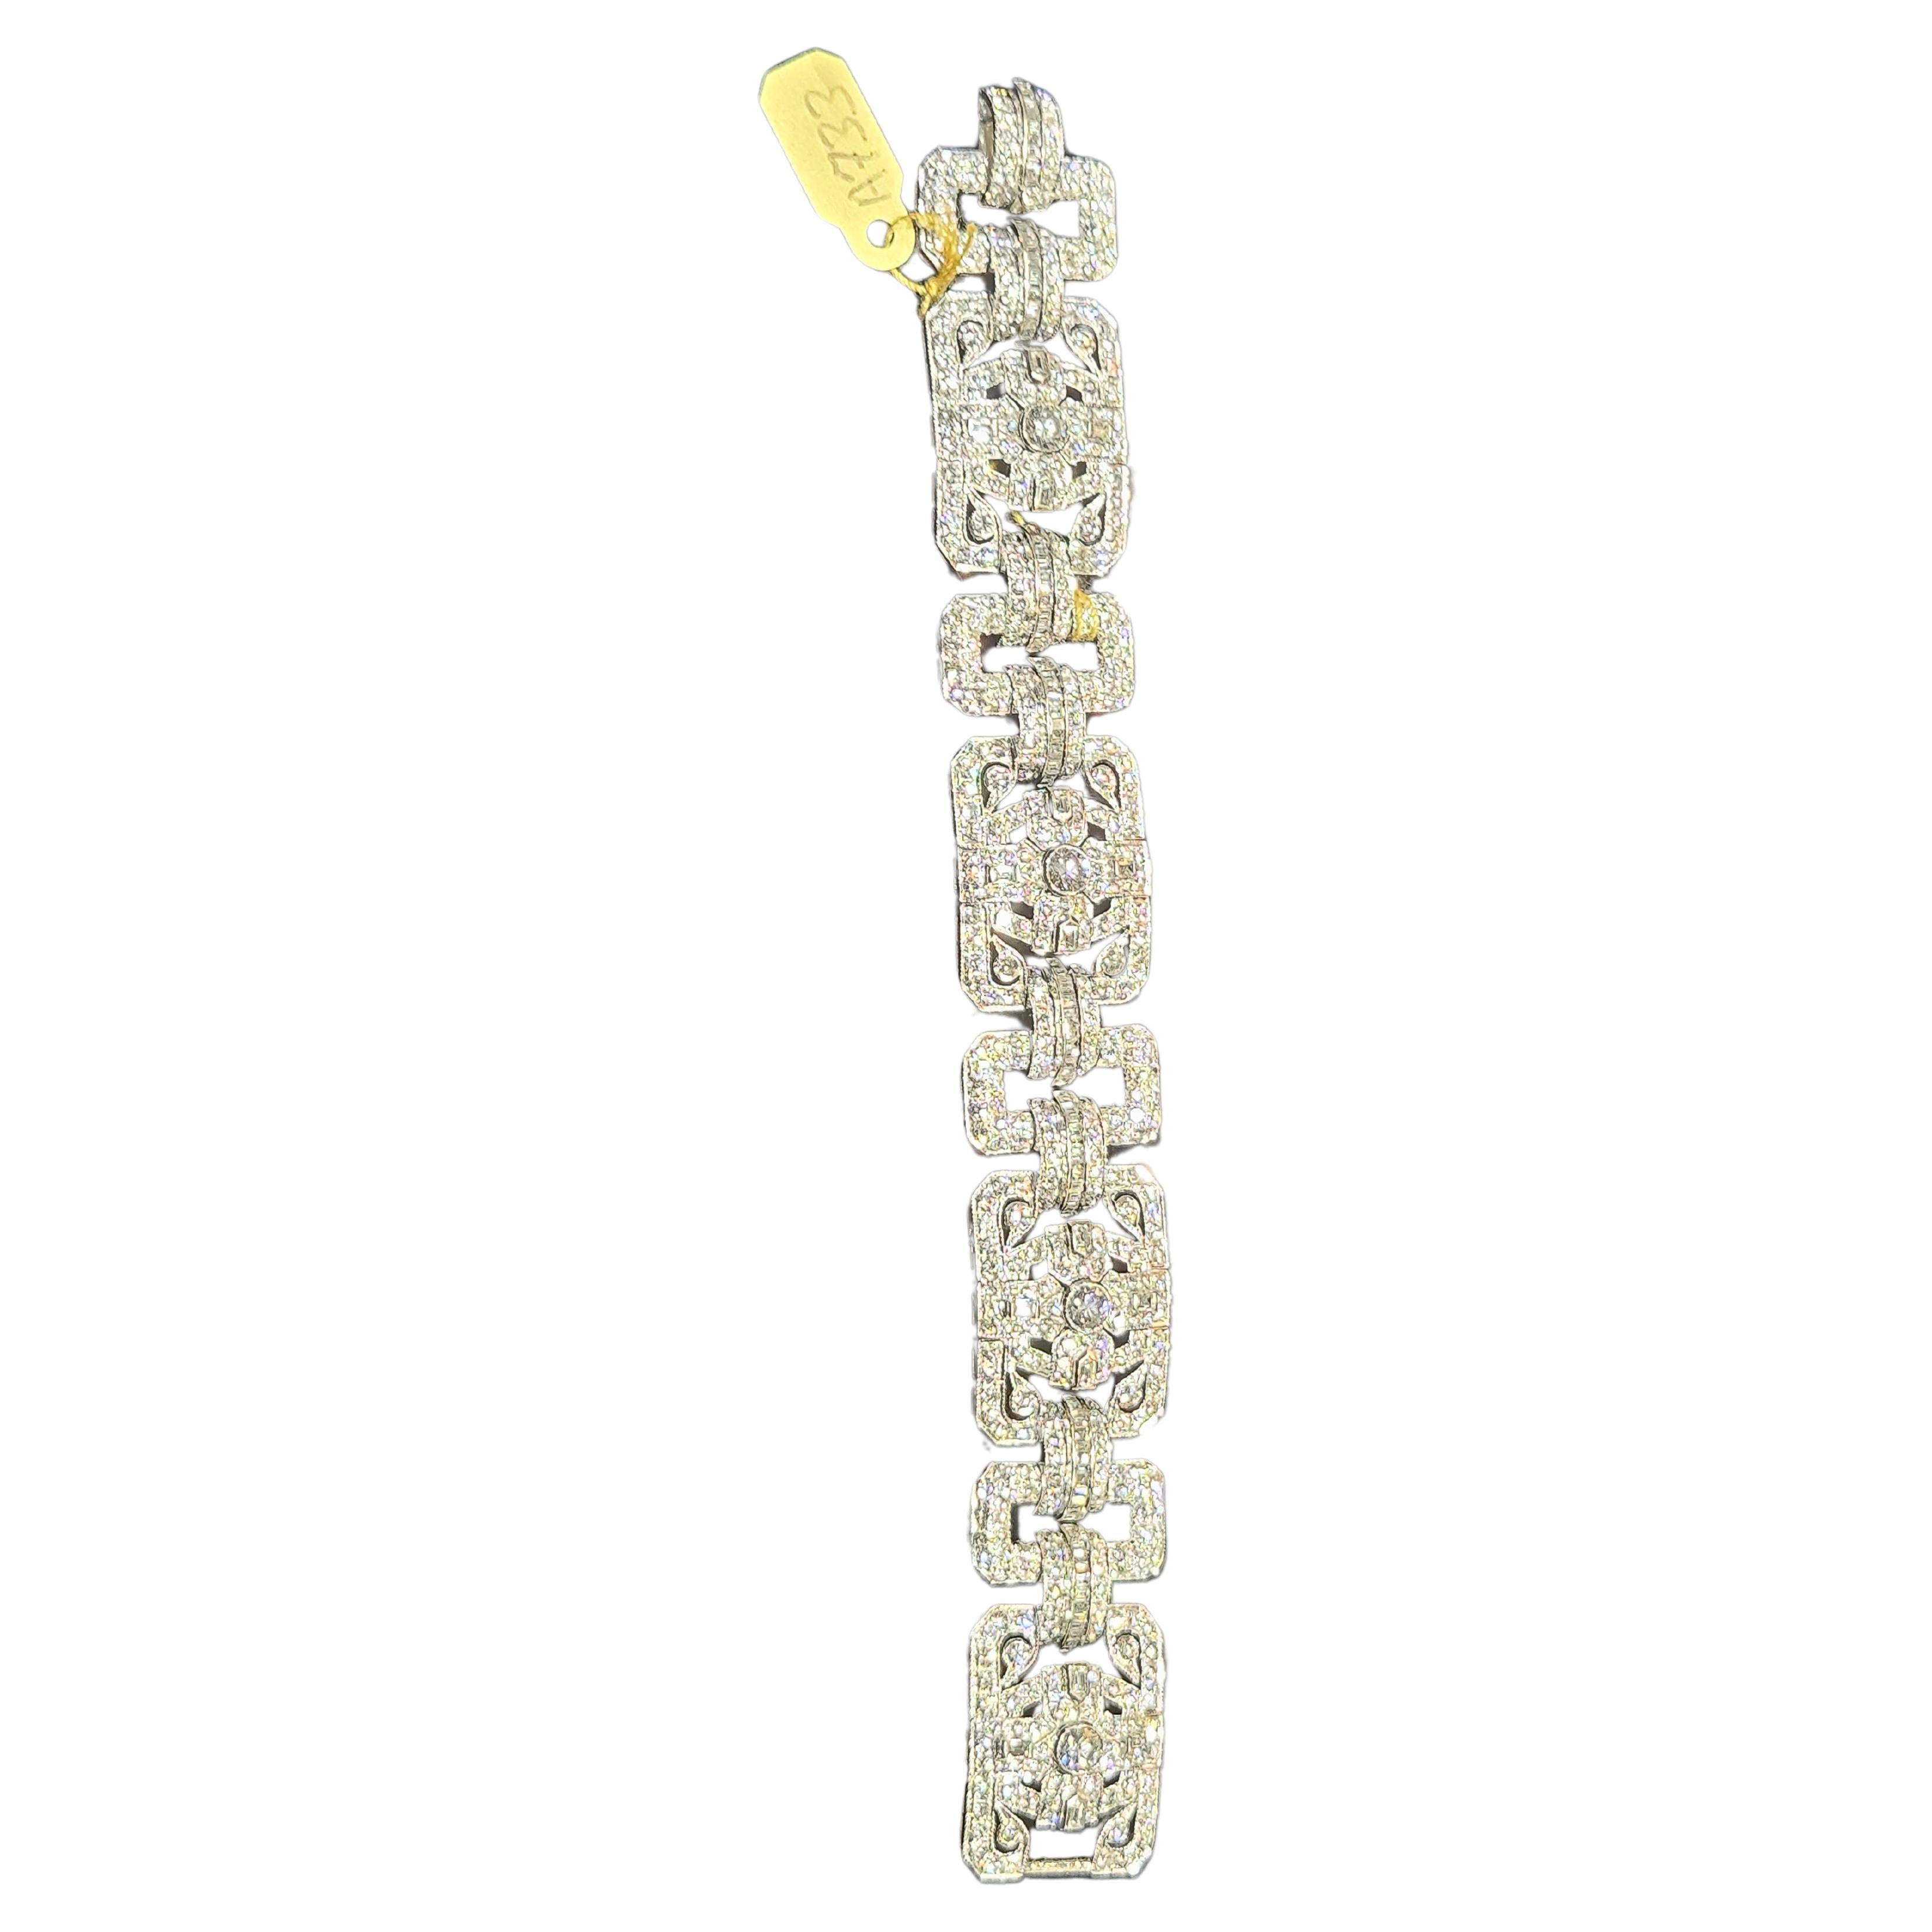 NEU $80, 000 18KT Gold Fancy Wunderschönes glitzerndes Diamantarmband im Deko-Design, Deko-Design